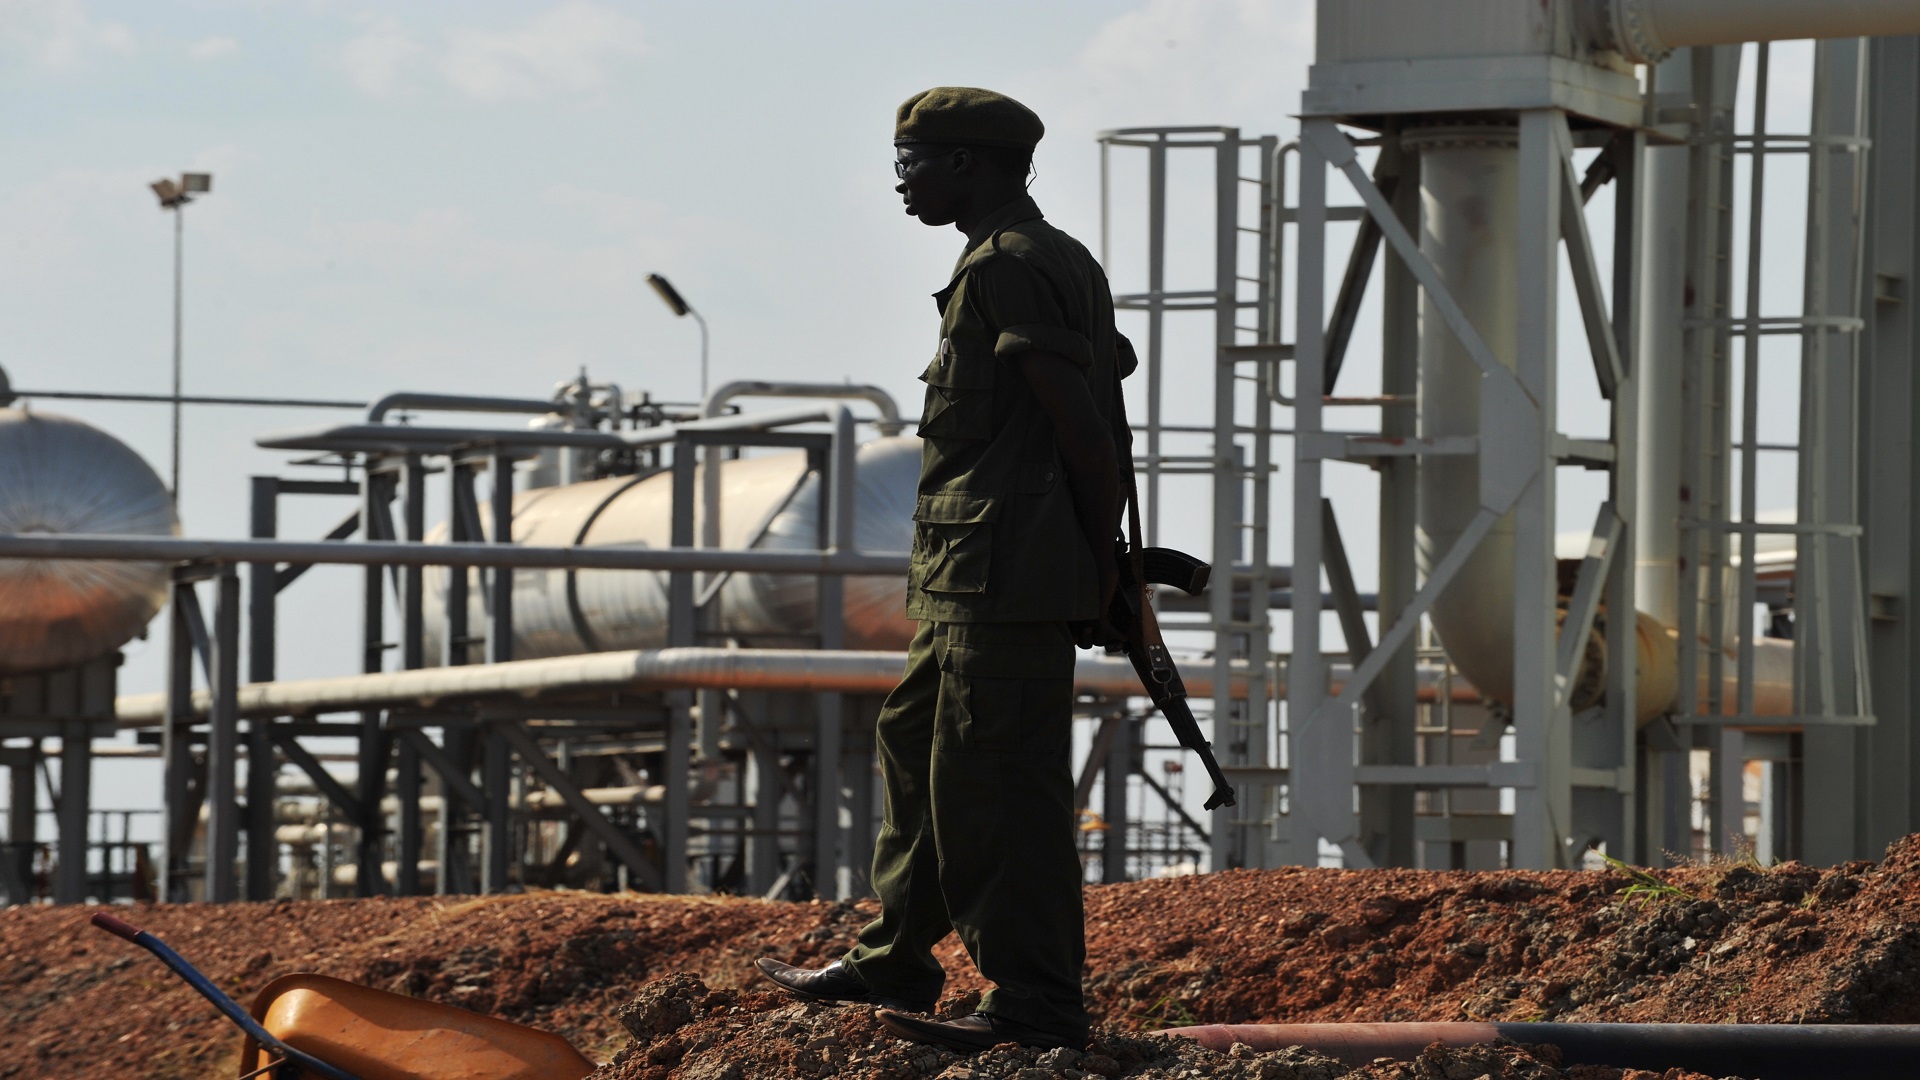 Производители нефти в африке